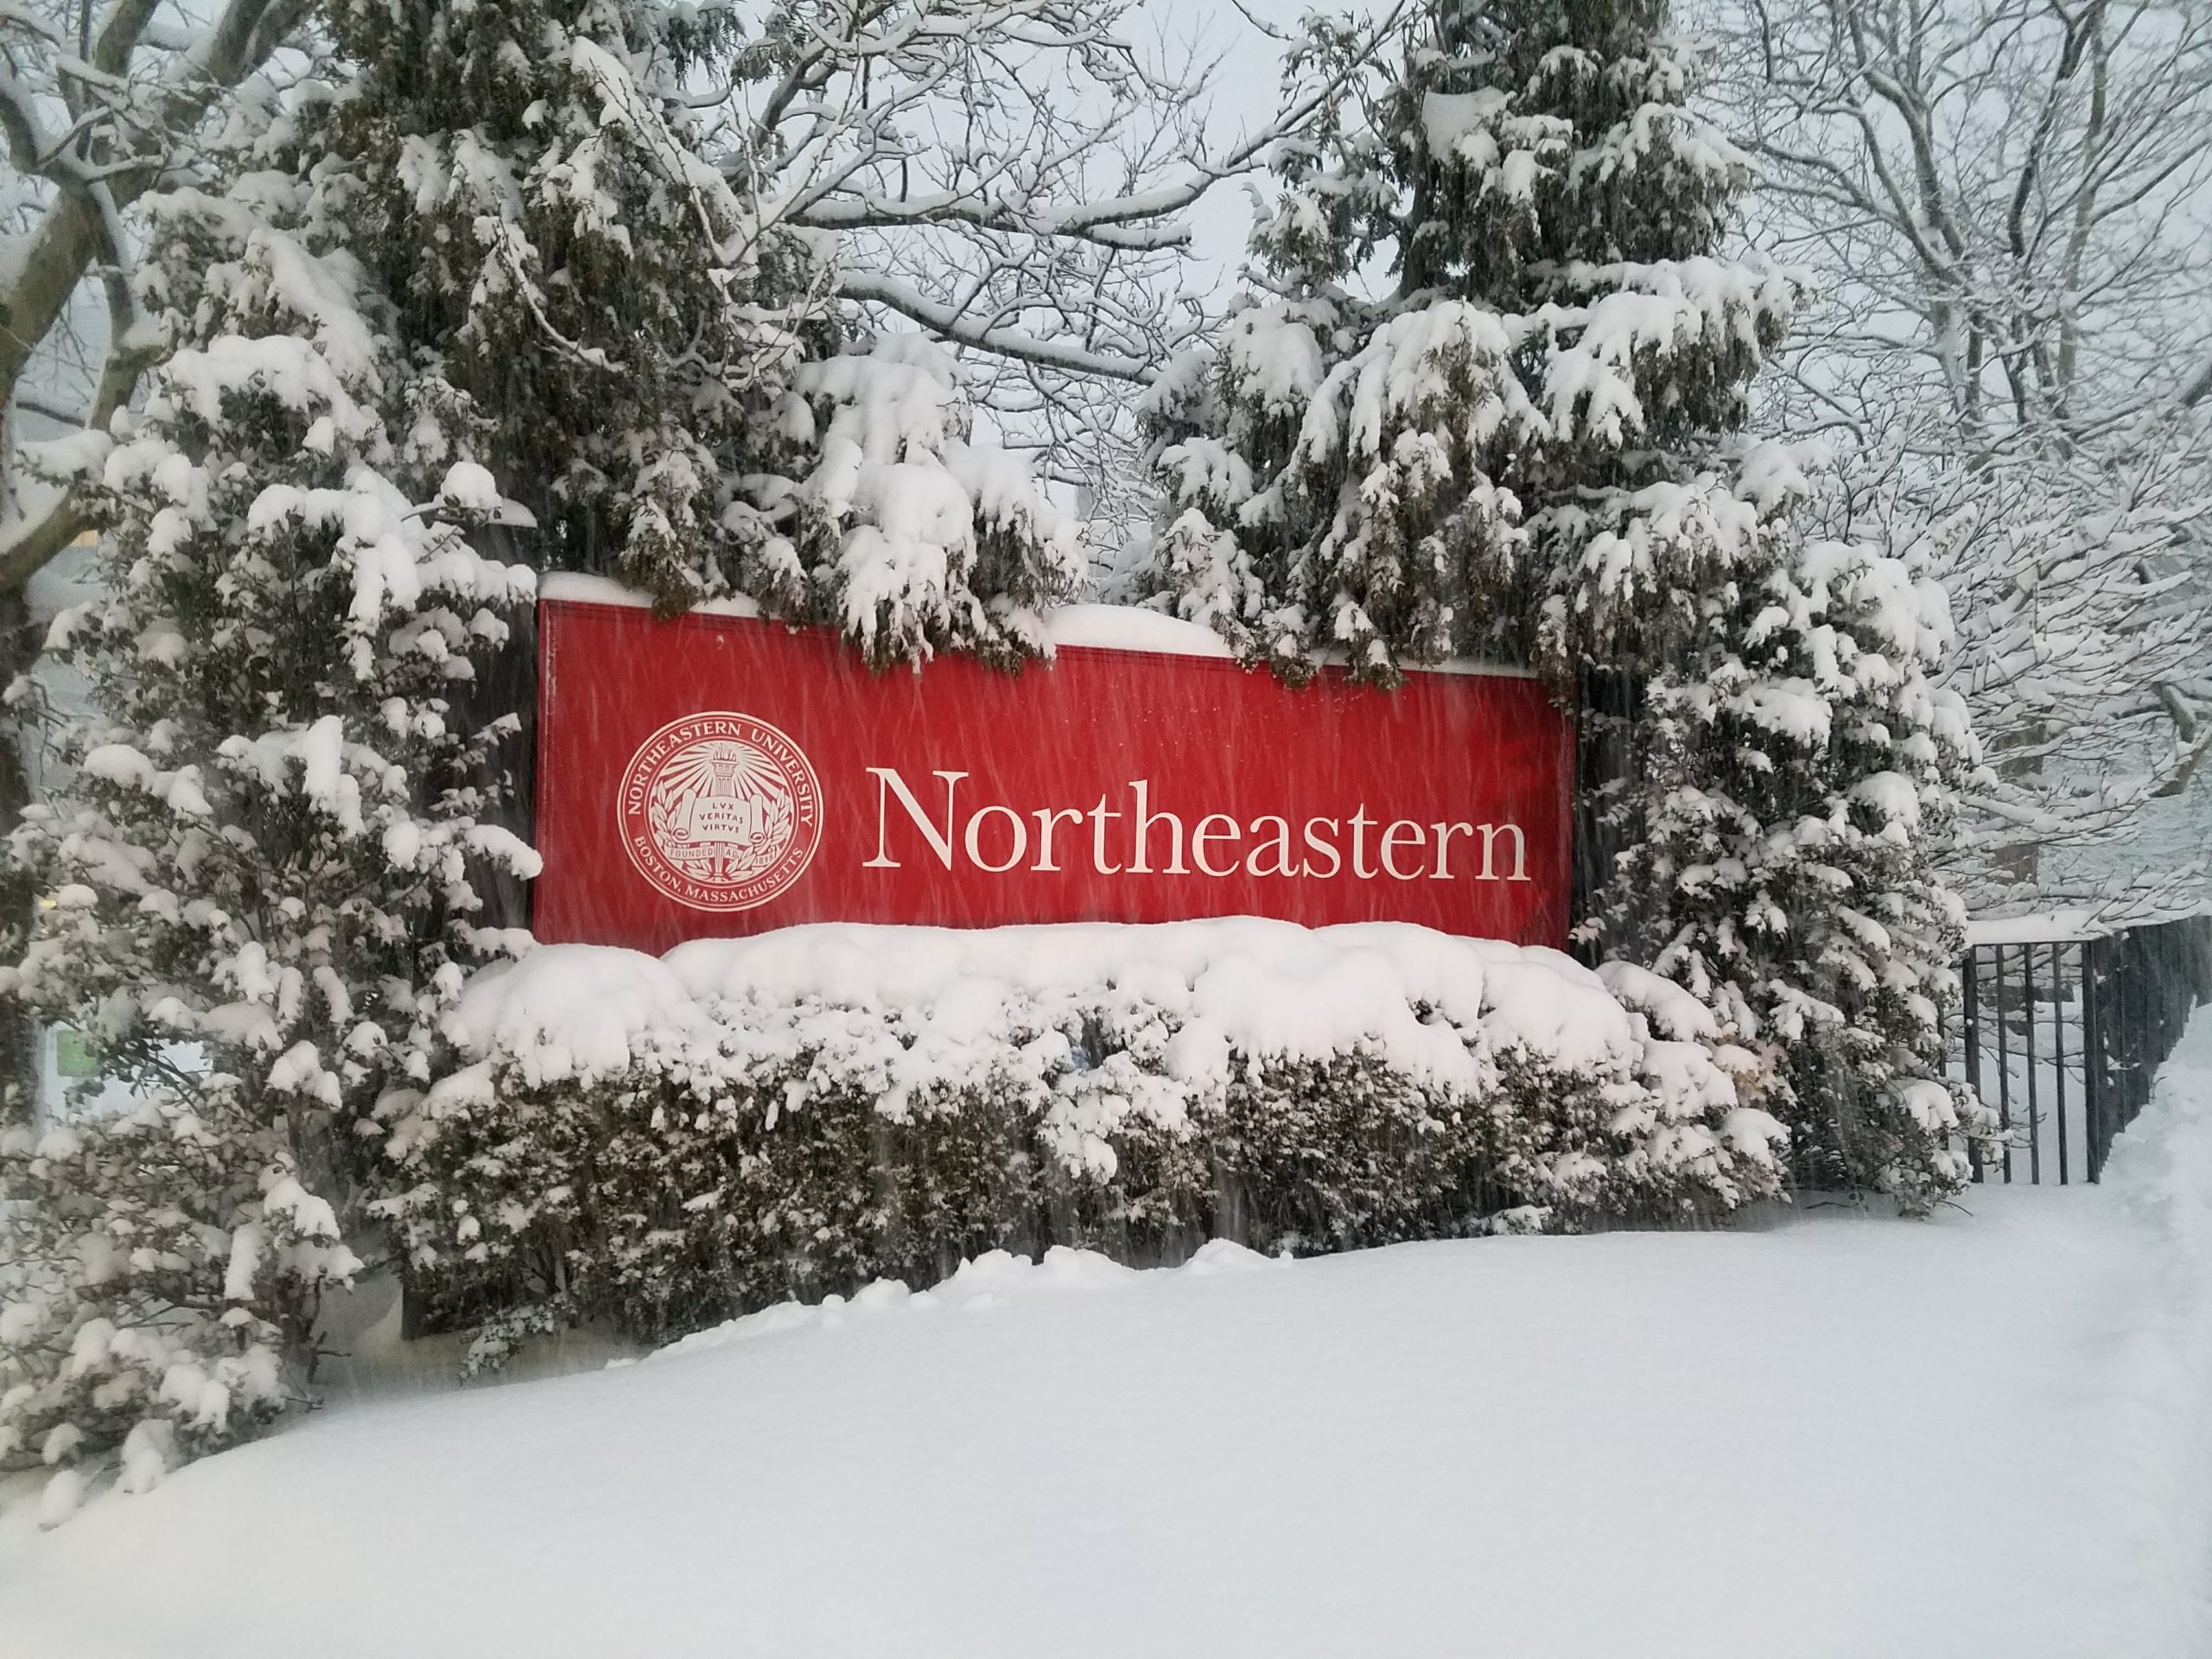 Northeastern University sign in snow